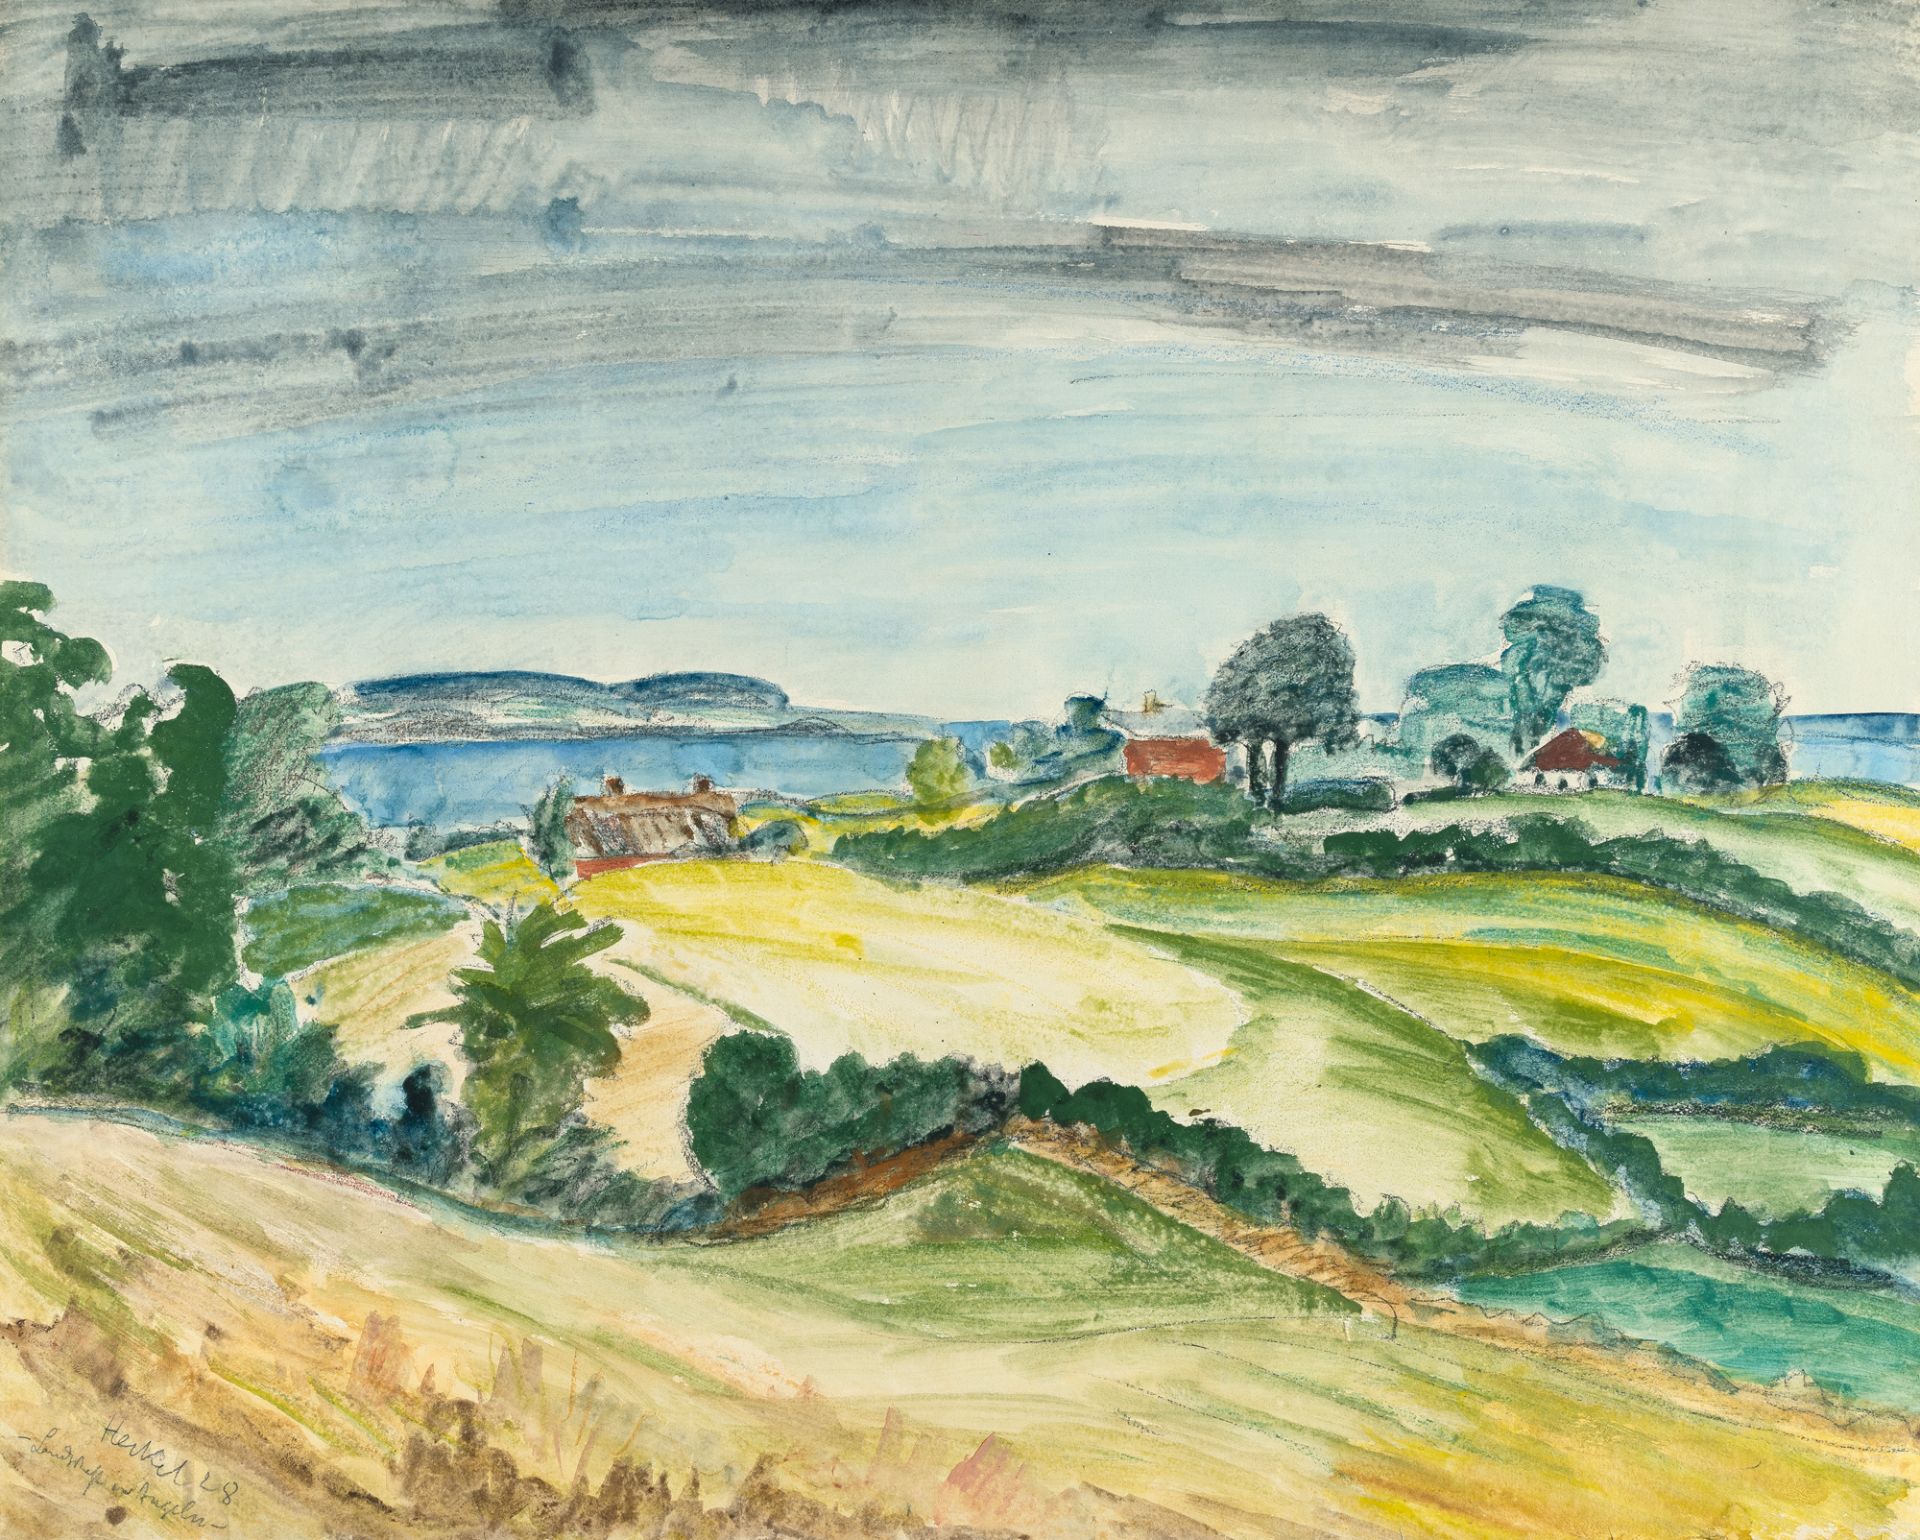 Erich Heckel, „Landschaft in Angeln“ (Landscape in Angeln).Watercolour, gouache and chalk on laid